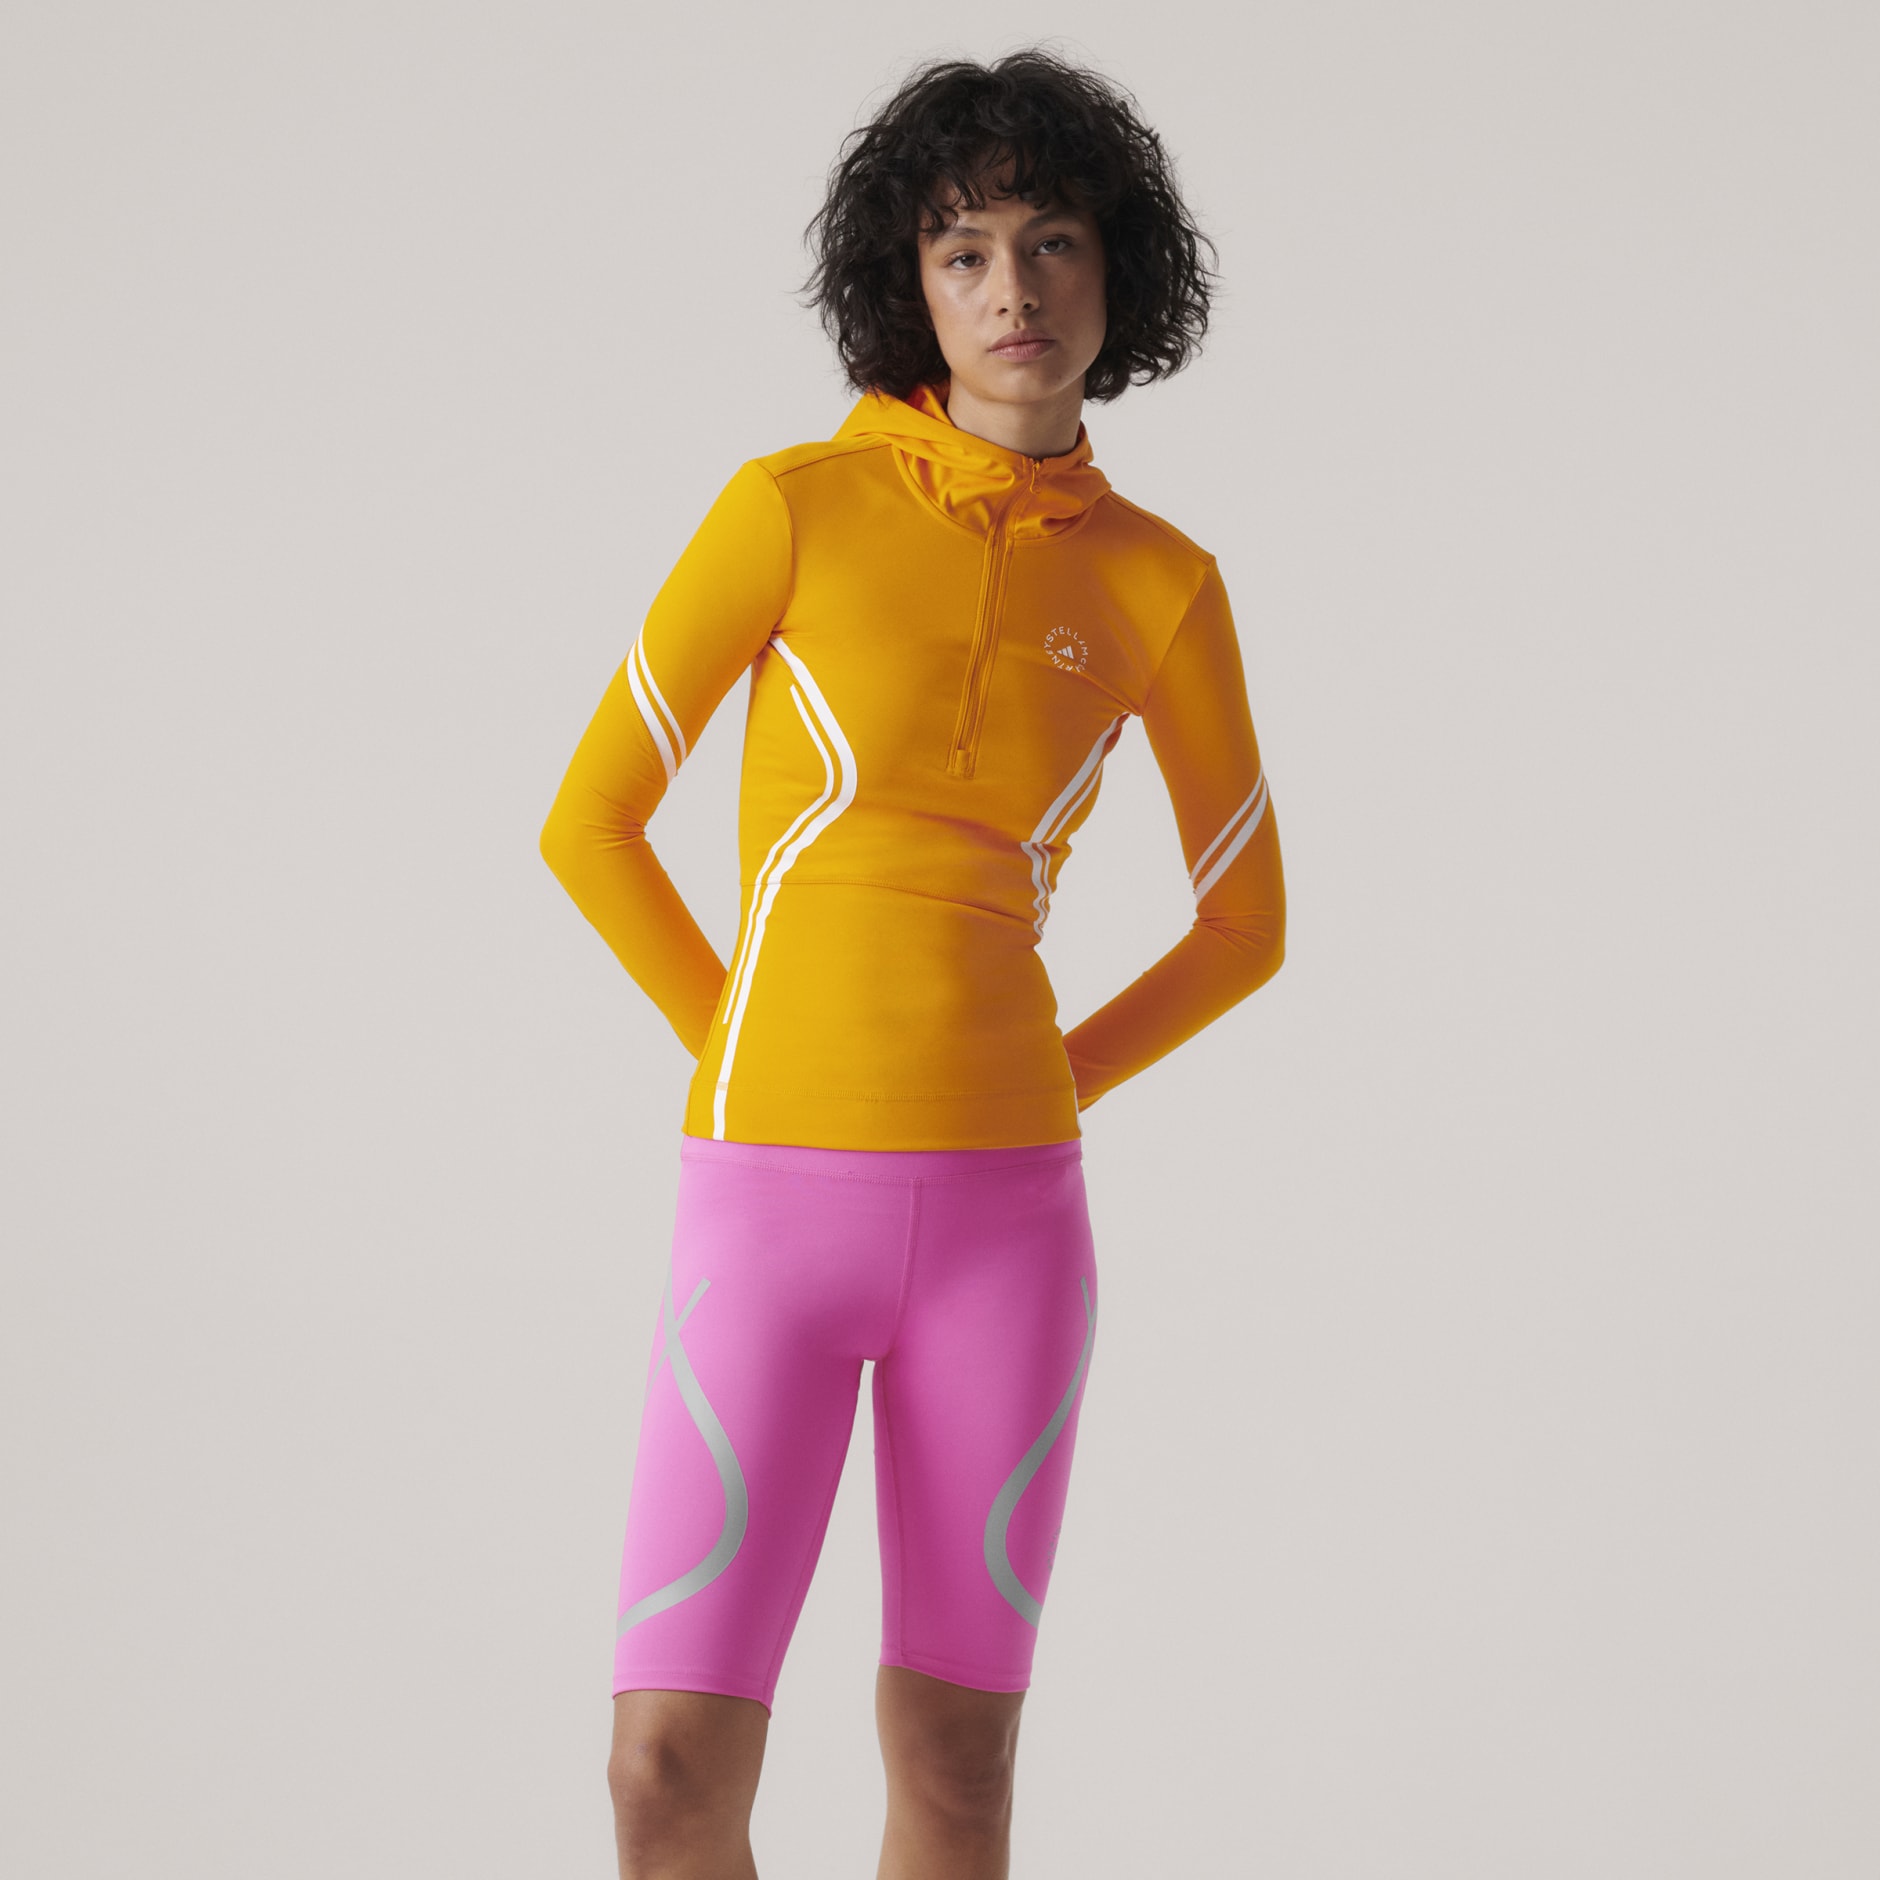 adidas by Stella McCartney TruePace cycling shorts